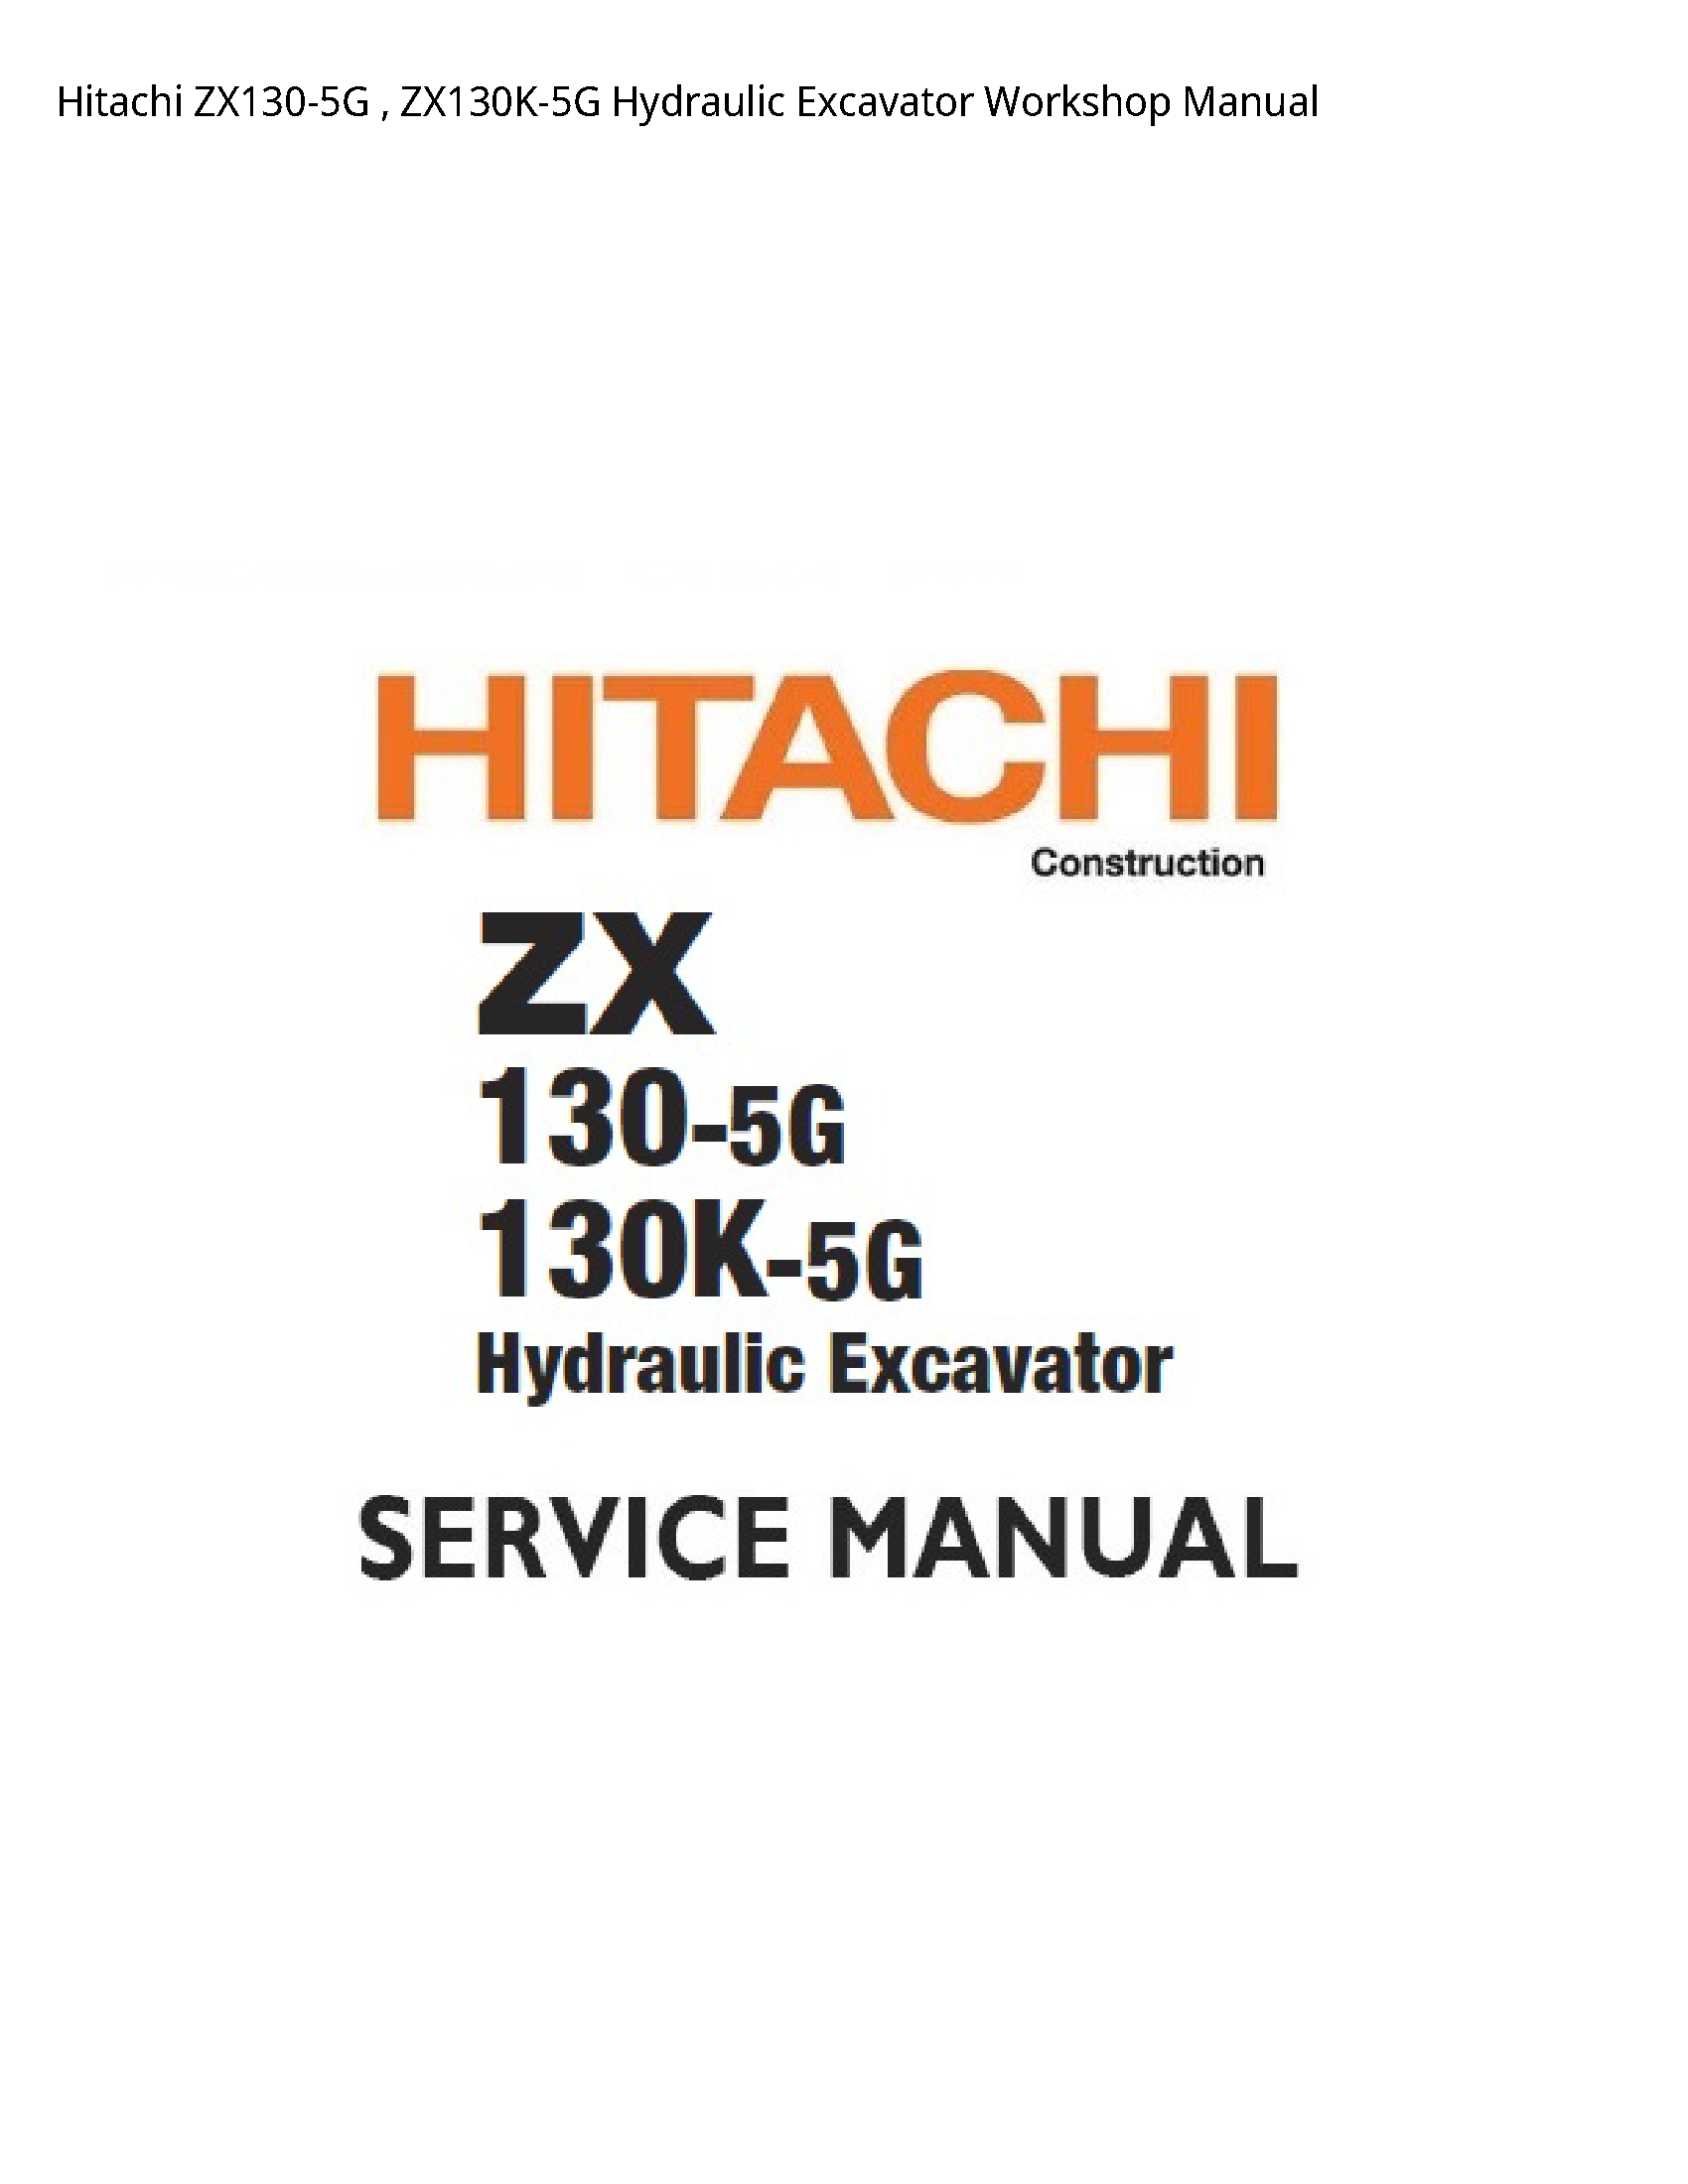 Hitachi ZX130-5G Hydraulic Excavator manual